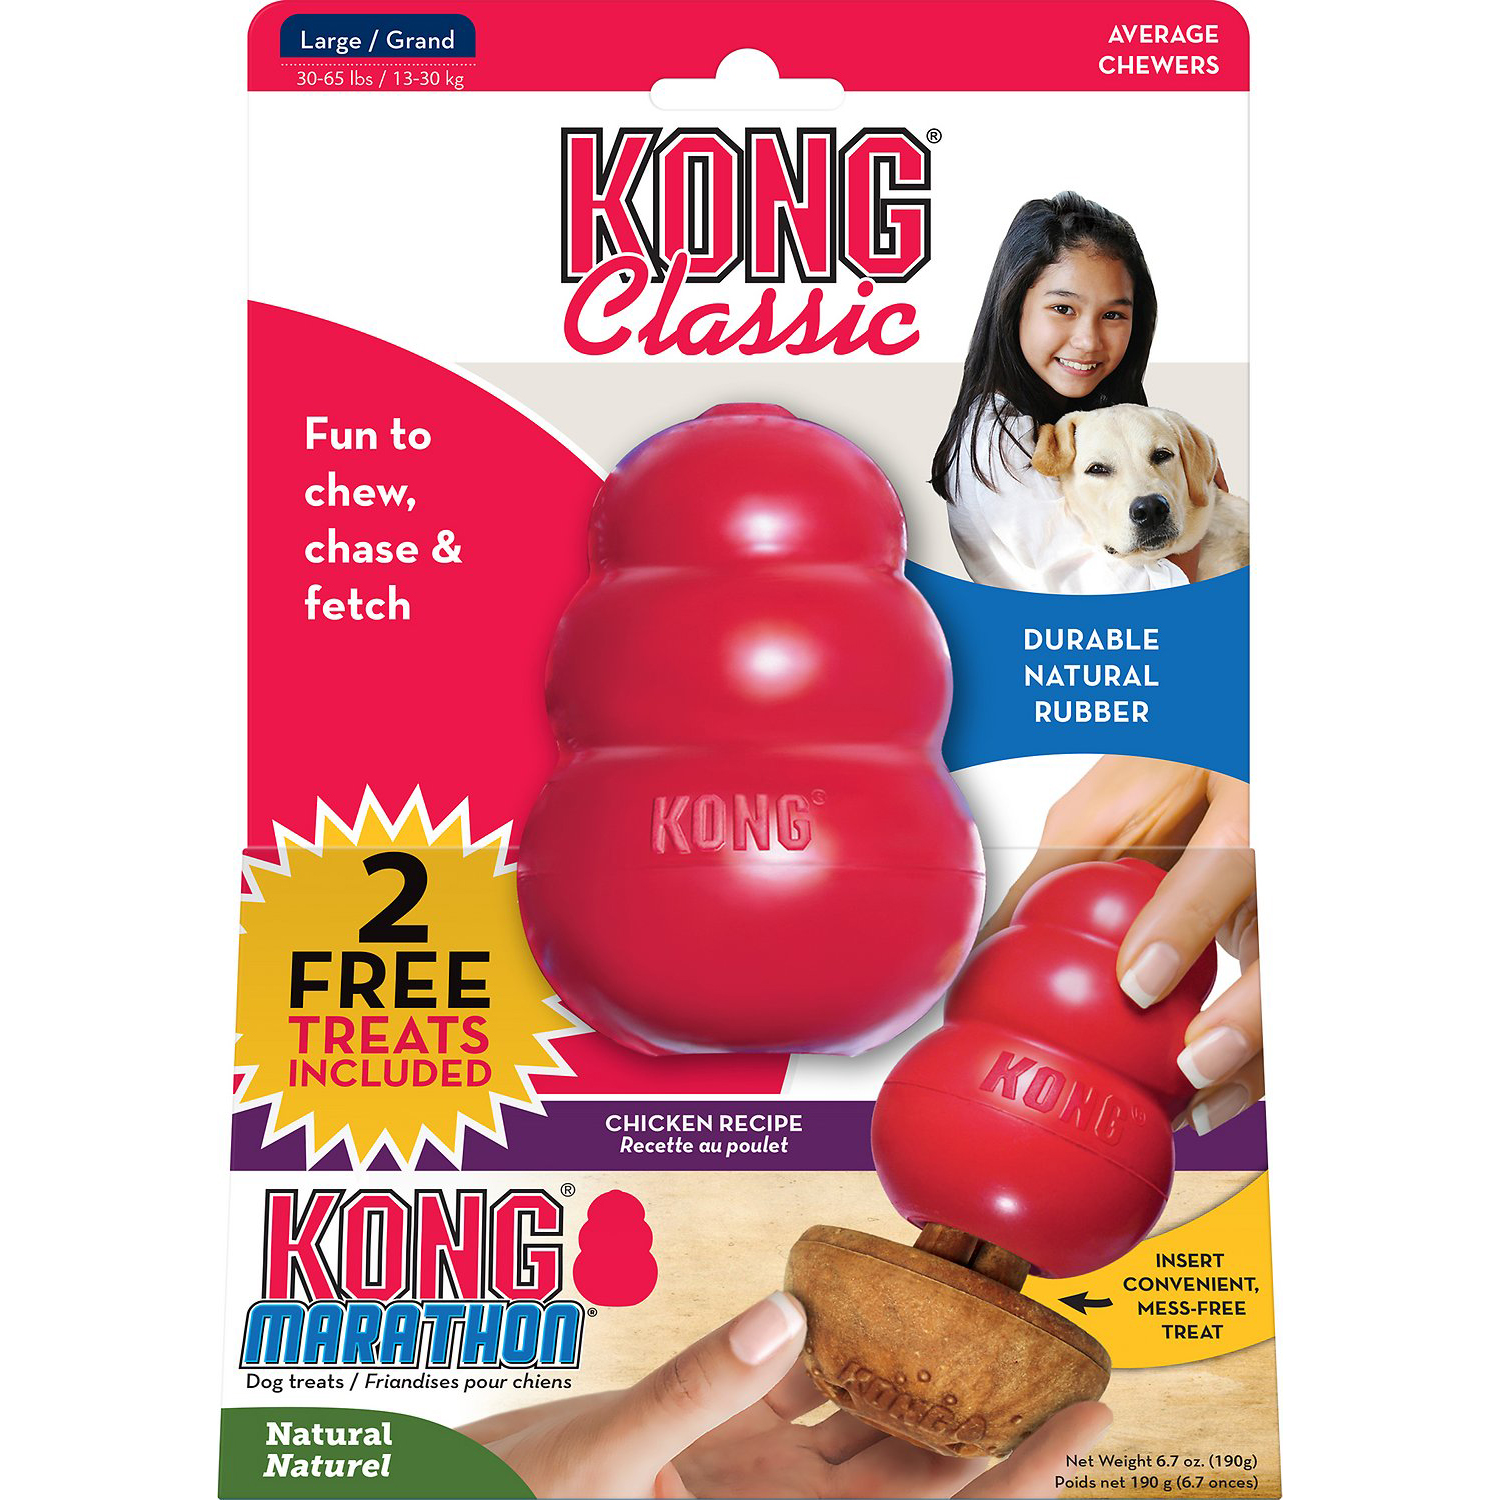 KONG Marathon Chicken Recipe Treat Dispenser Dog Toy, Large